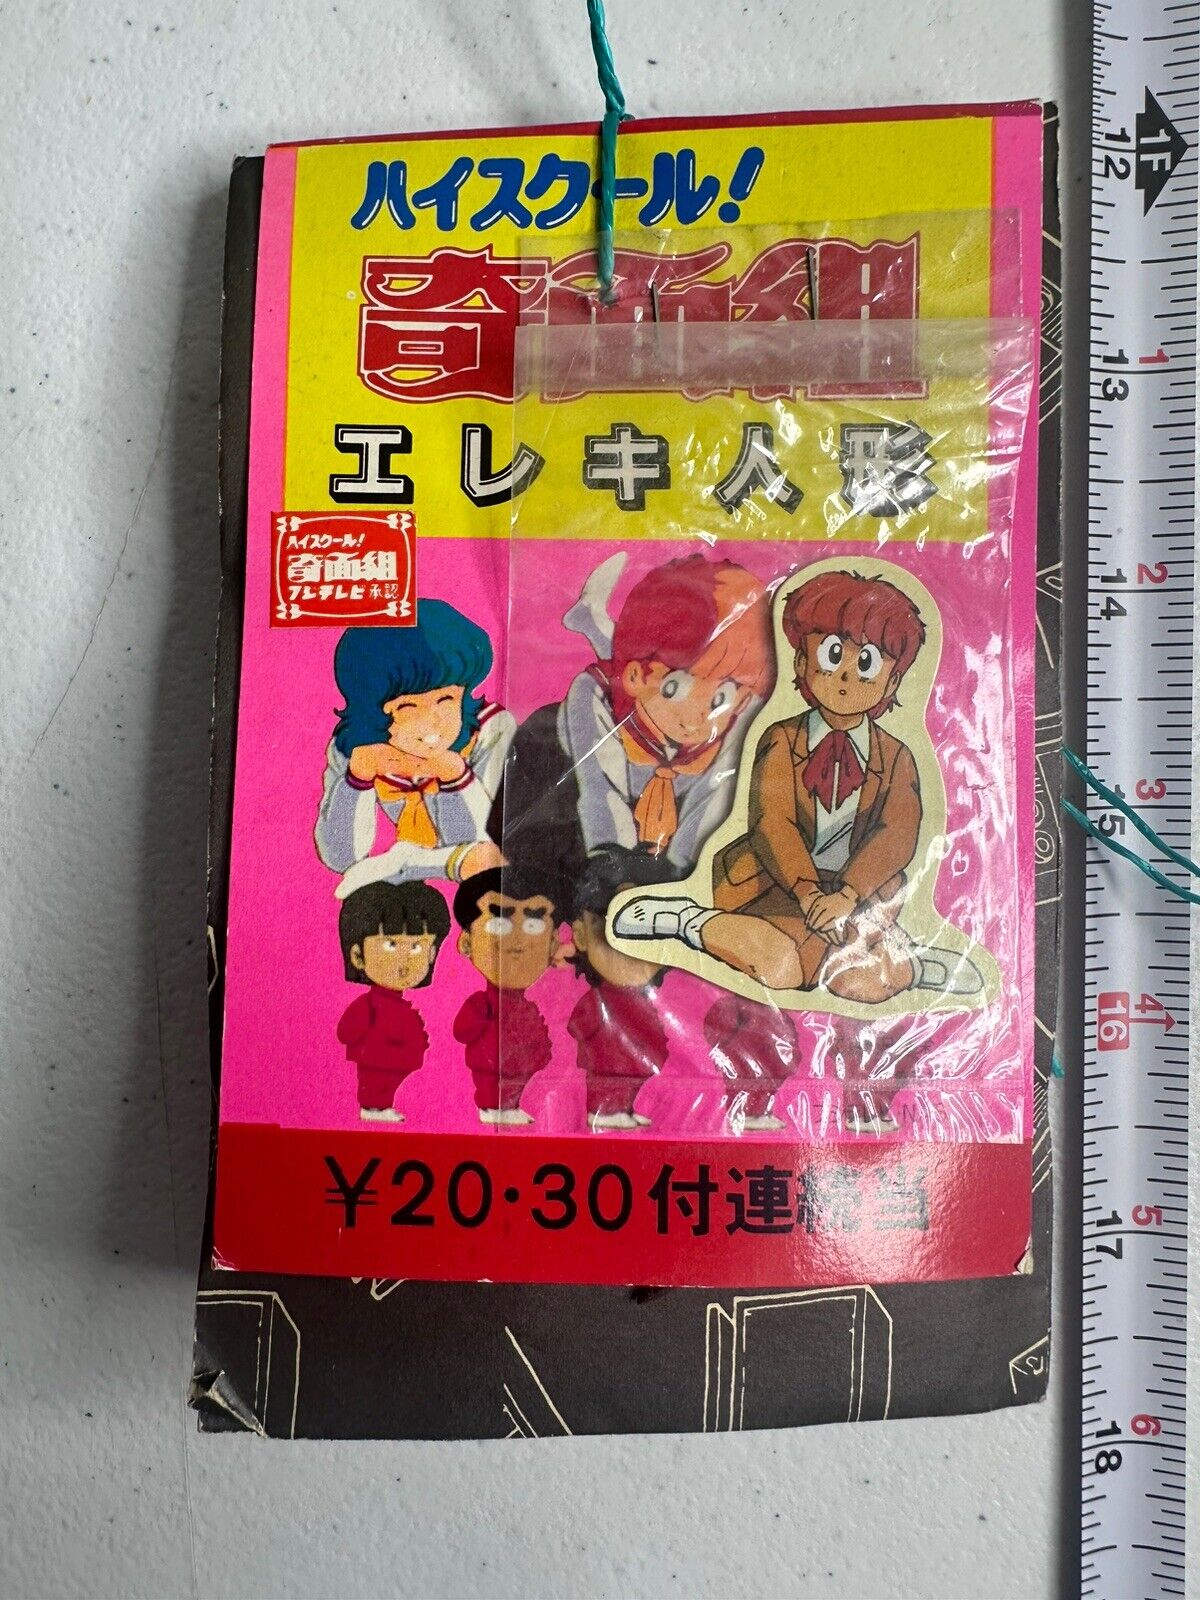 Vintage 80s Japanese High School Kimengumi Electric Person Packs, Manga Series